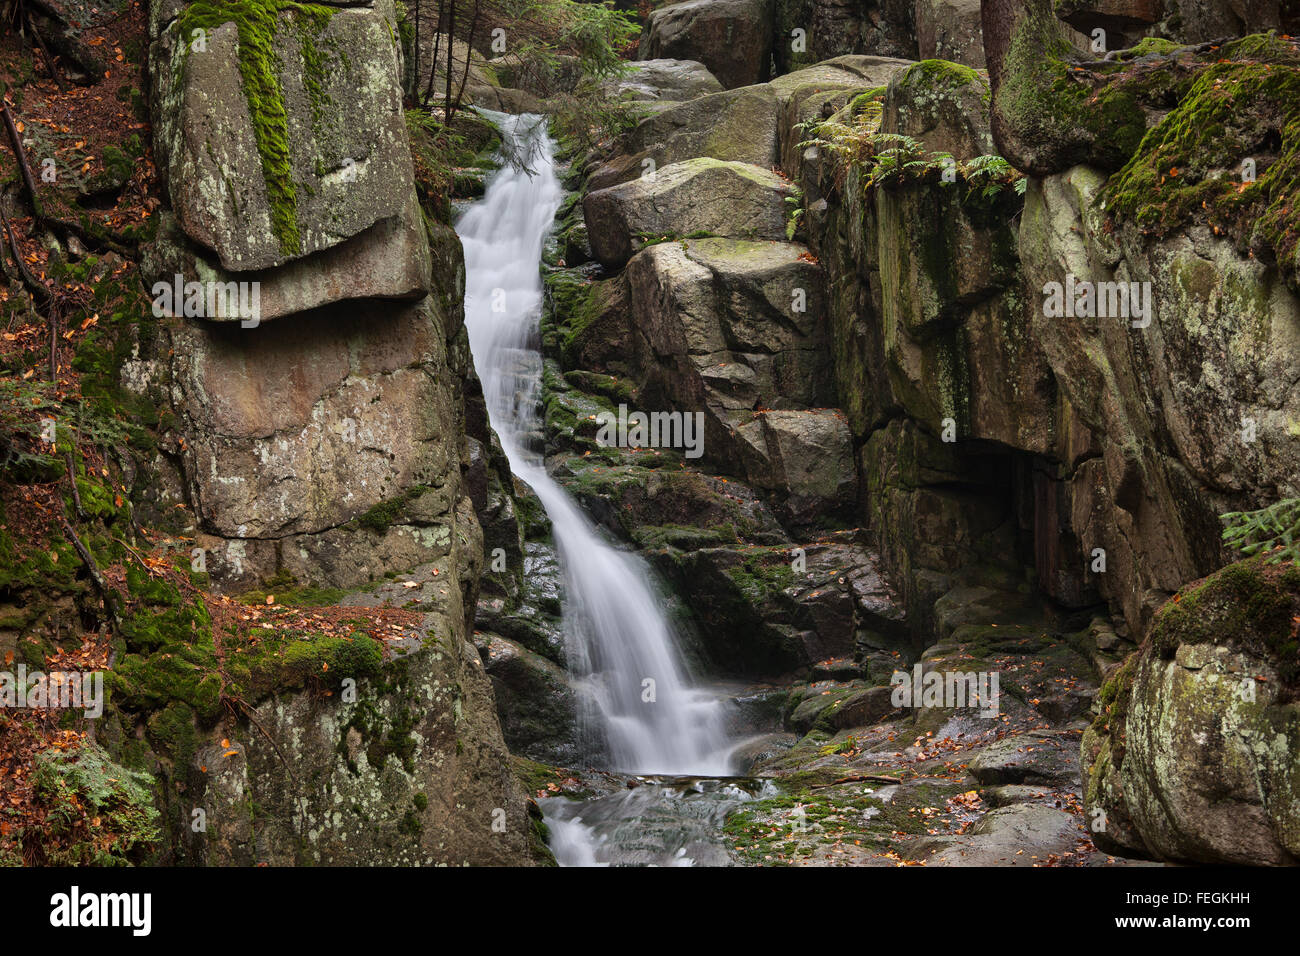 Podgorna waterfall in Przesieka, Karkonosze Mountains, Poland Stock Photo